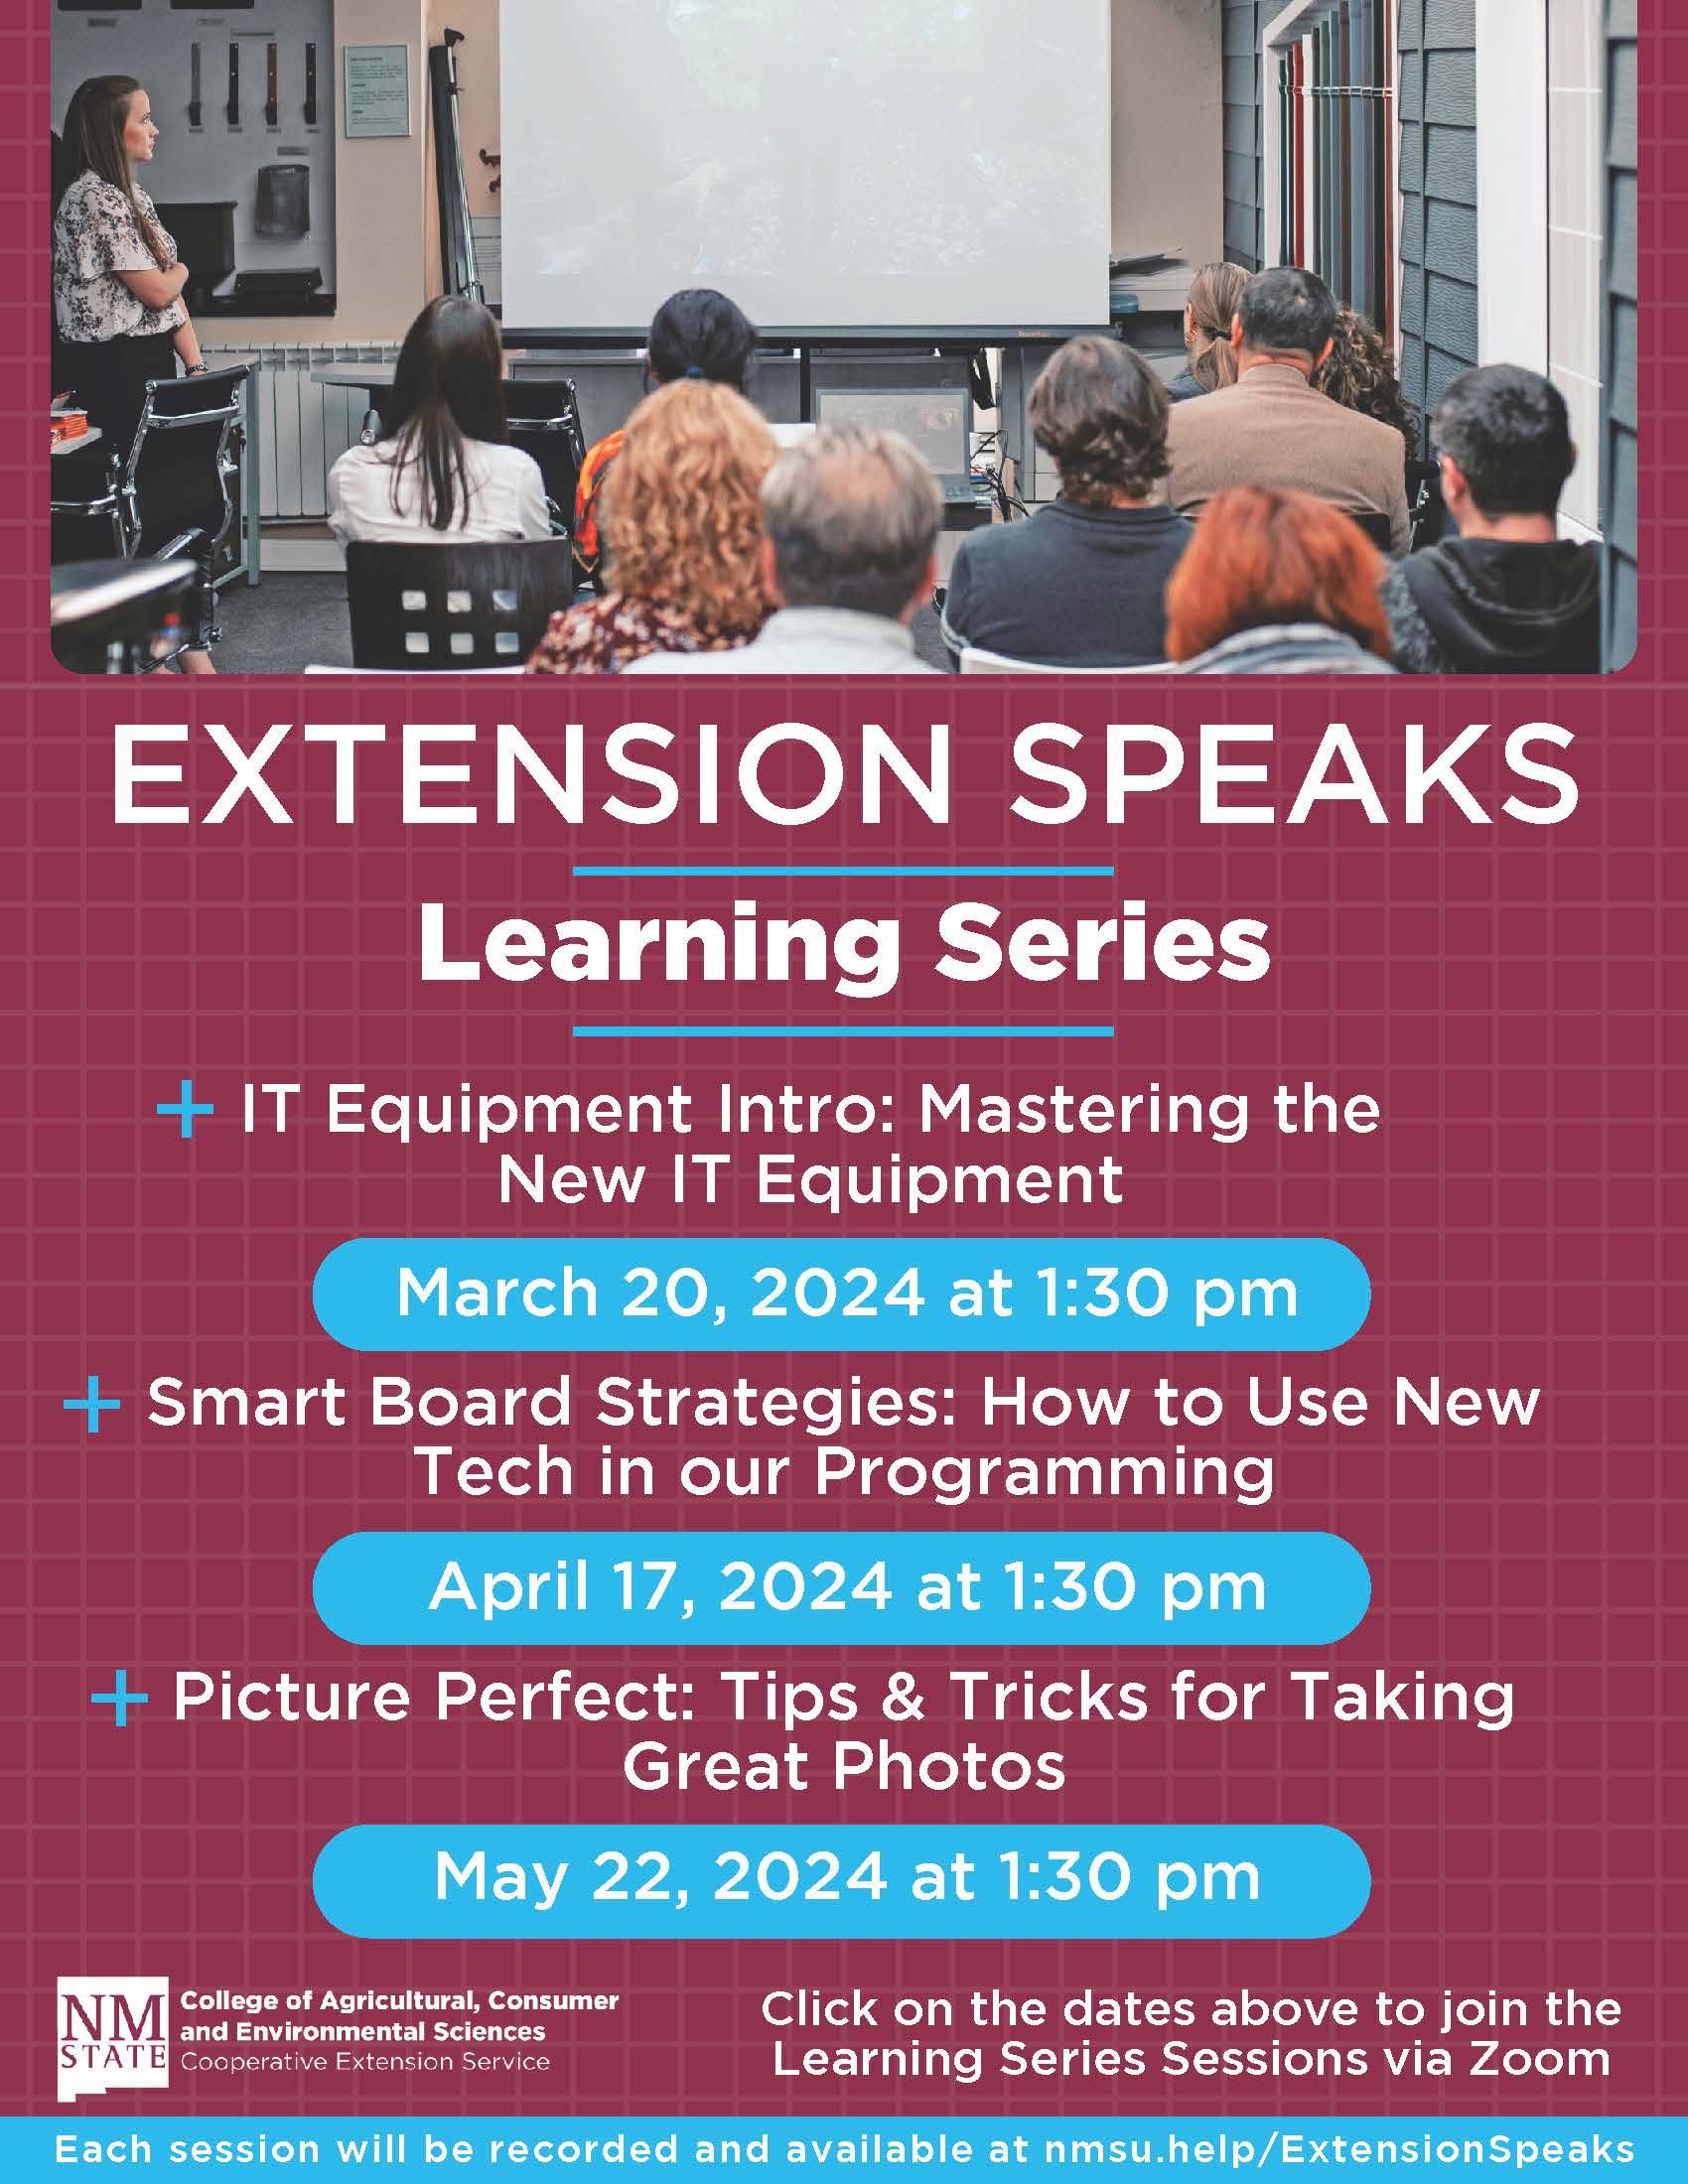 Extension-Speaks-Learning-Series flyer